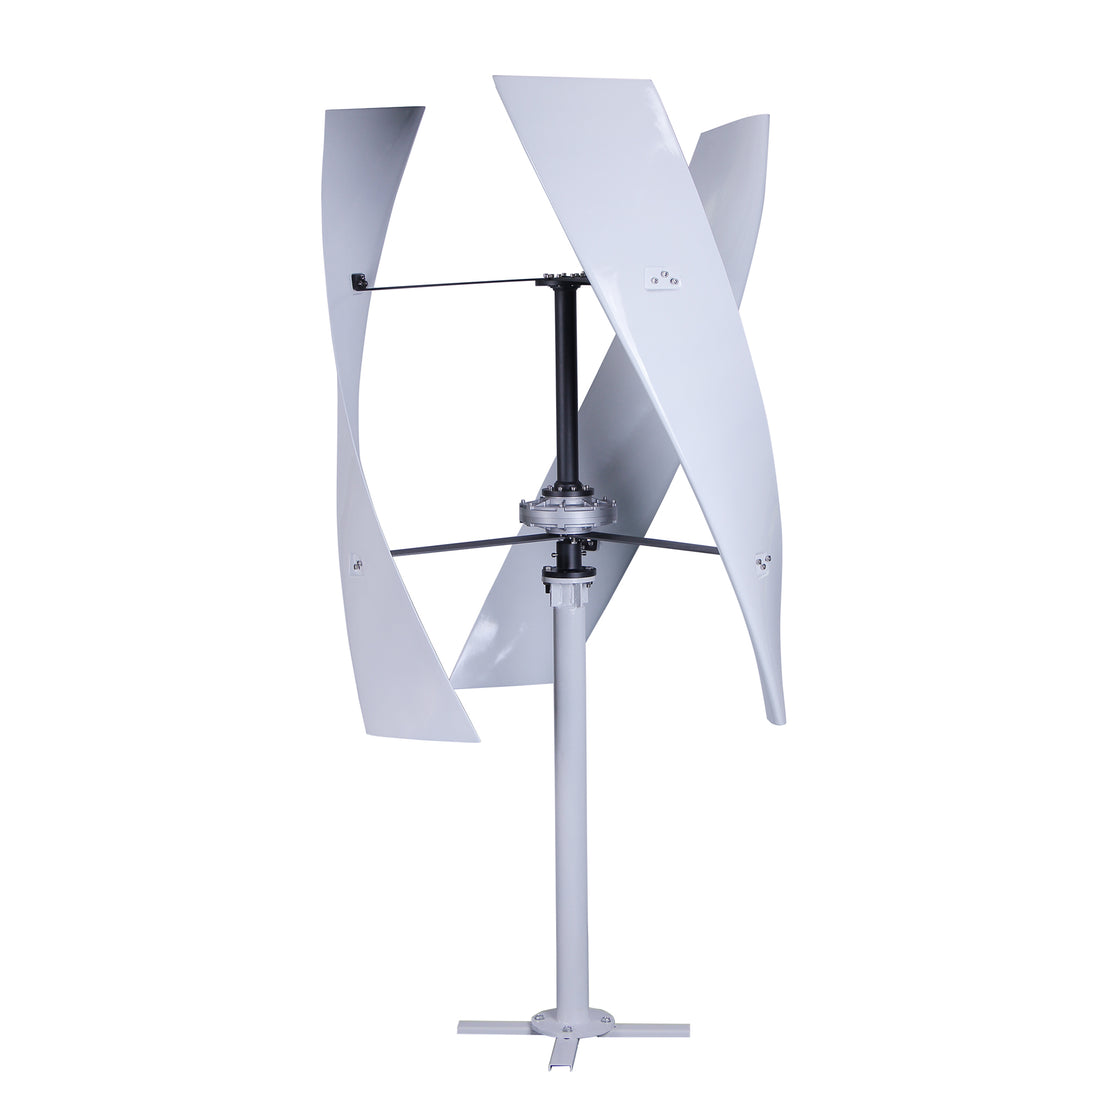 600W Windturbinen Typ X Vertikale Achse